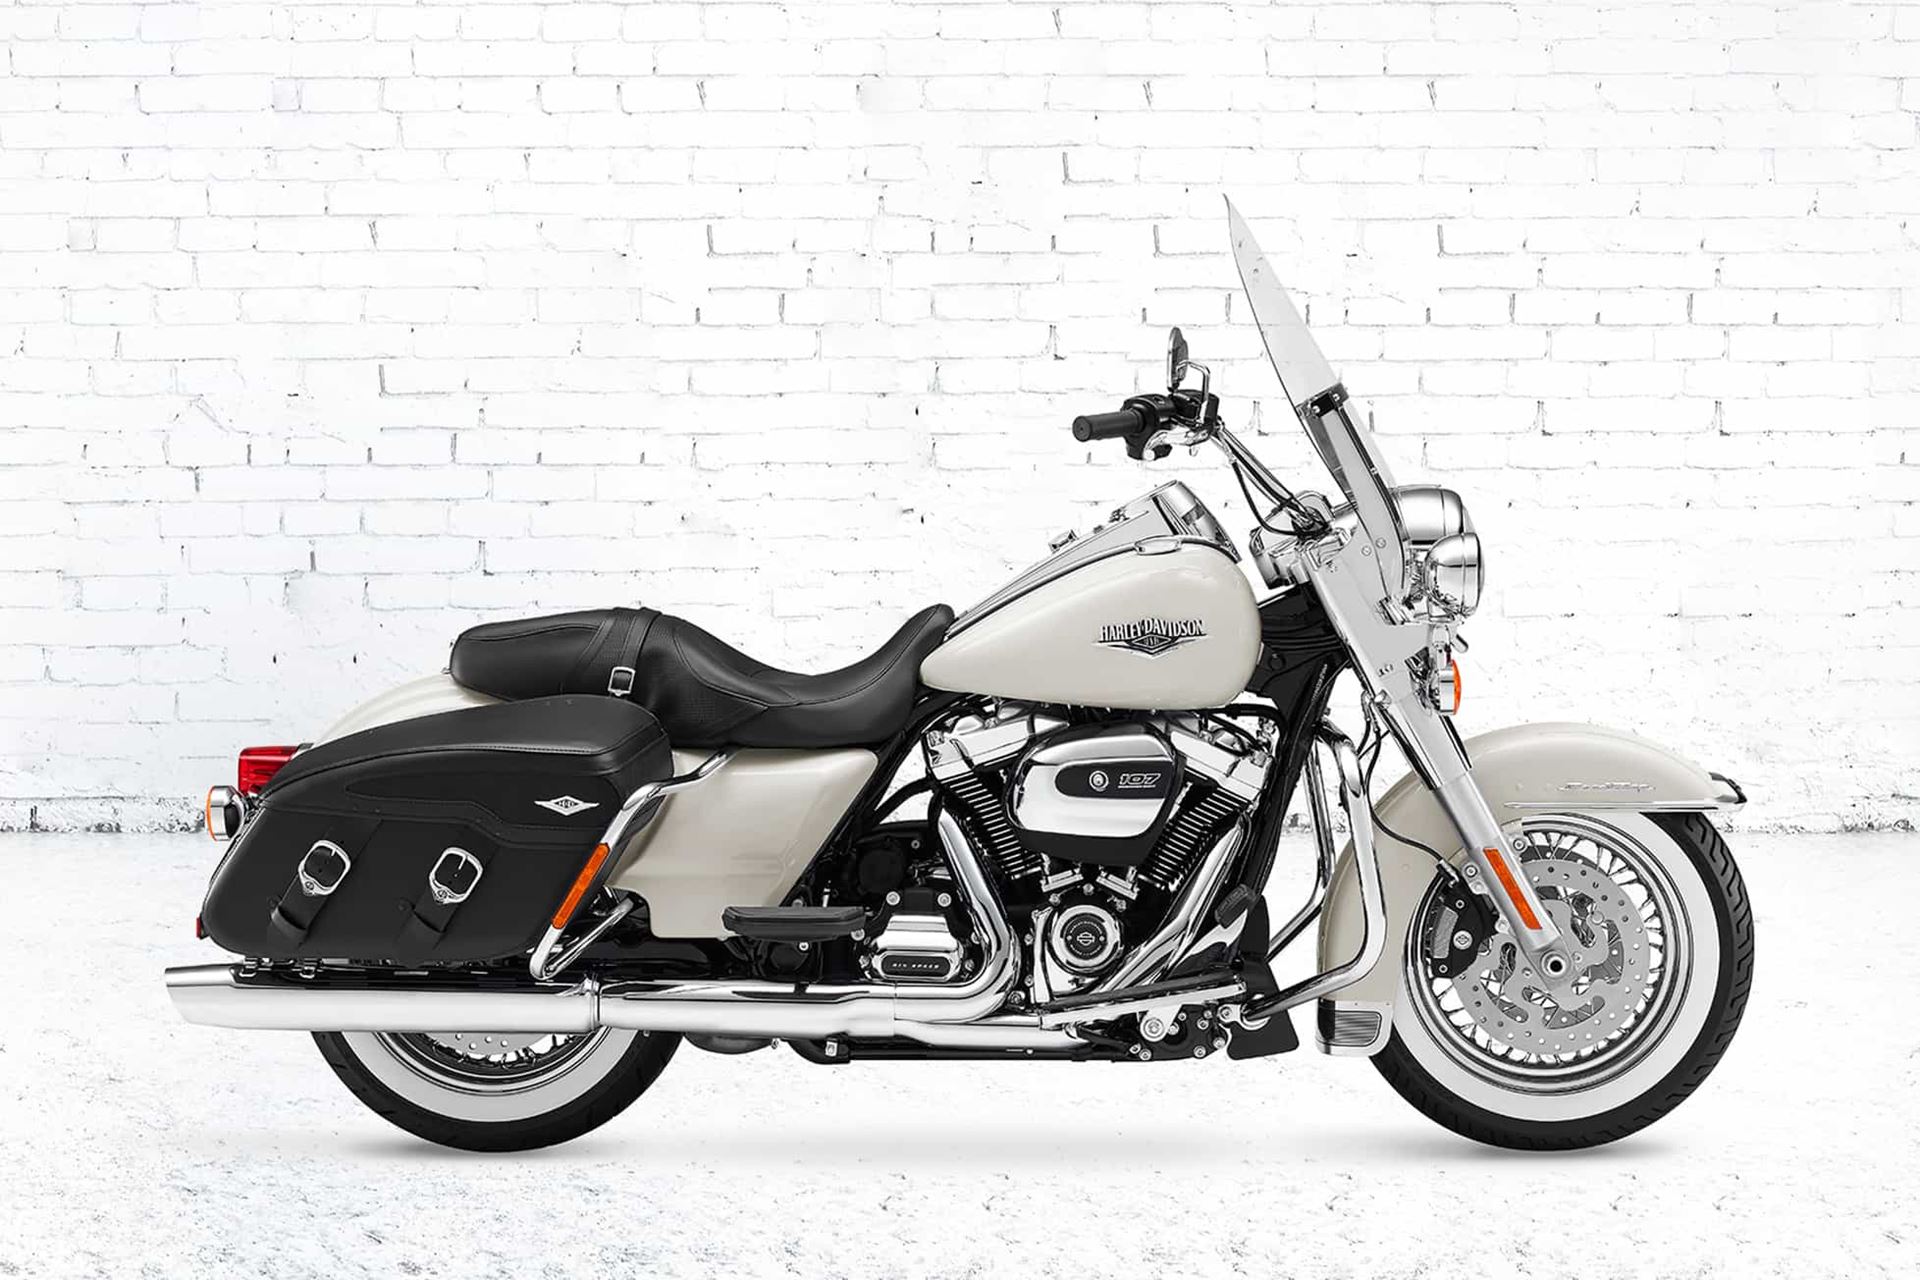 Comparar Harley Davidson Road King Classic Com Harley Davidson Deluxe Andar De Moto